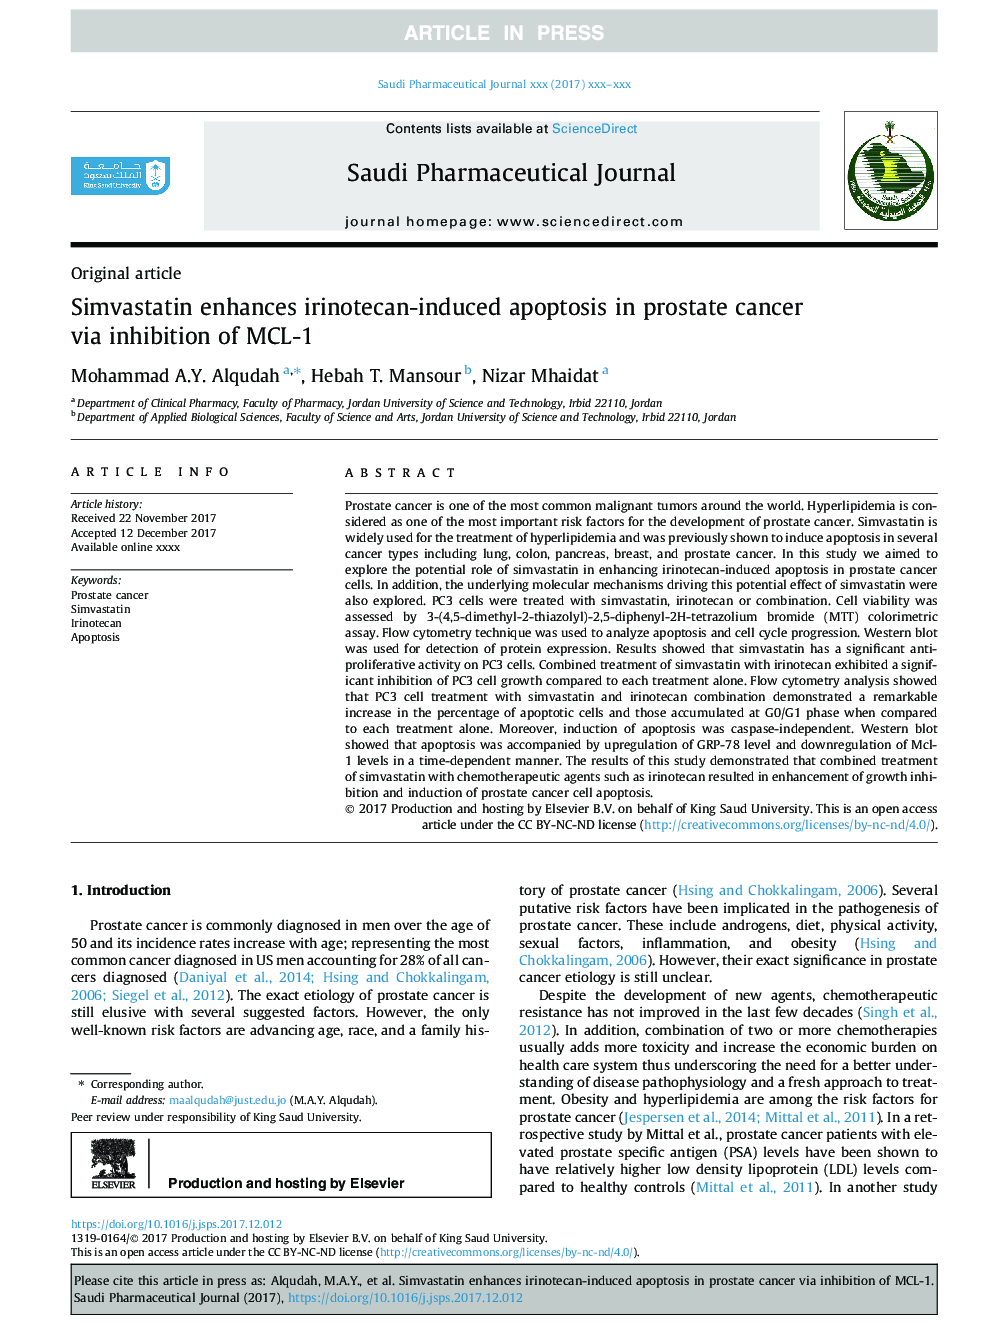 Simvastatin enhances irinotecan-induced apoptosis in prostate cancer via inhibition of MCL-1